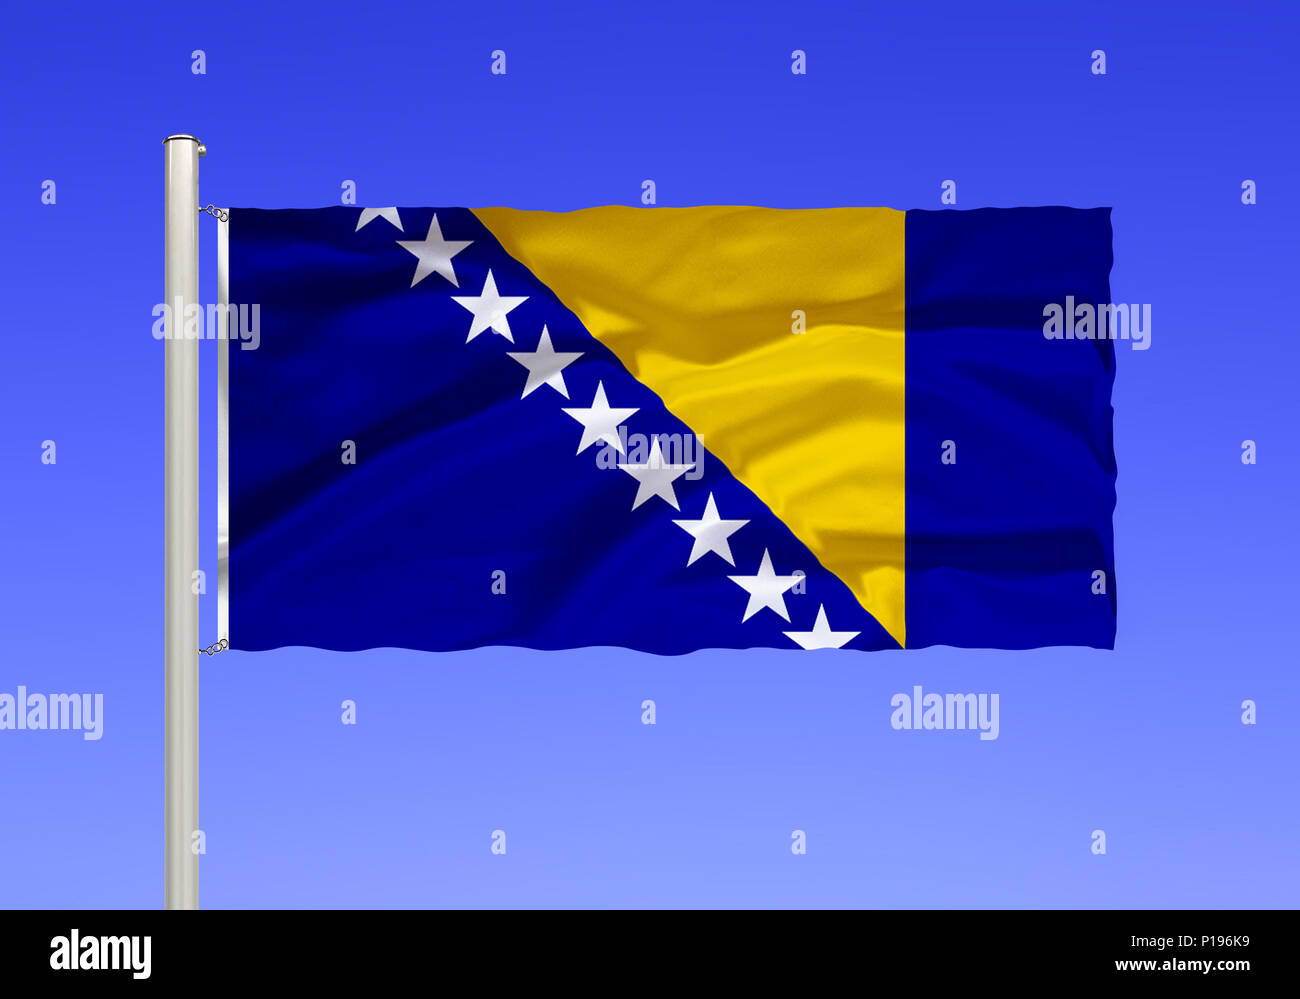 https://c8.alamy.com/comp/P196K9/flag-of-bosnia-and-herzegovina-flagge-von-bosnien-und-herzegowina-P196K9.jpg